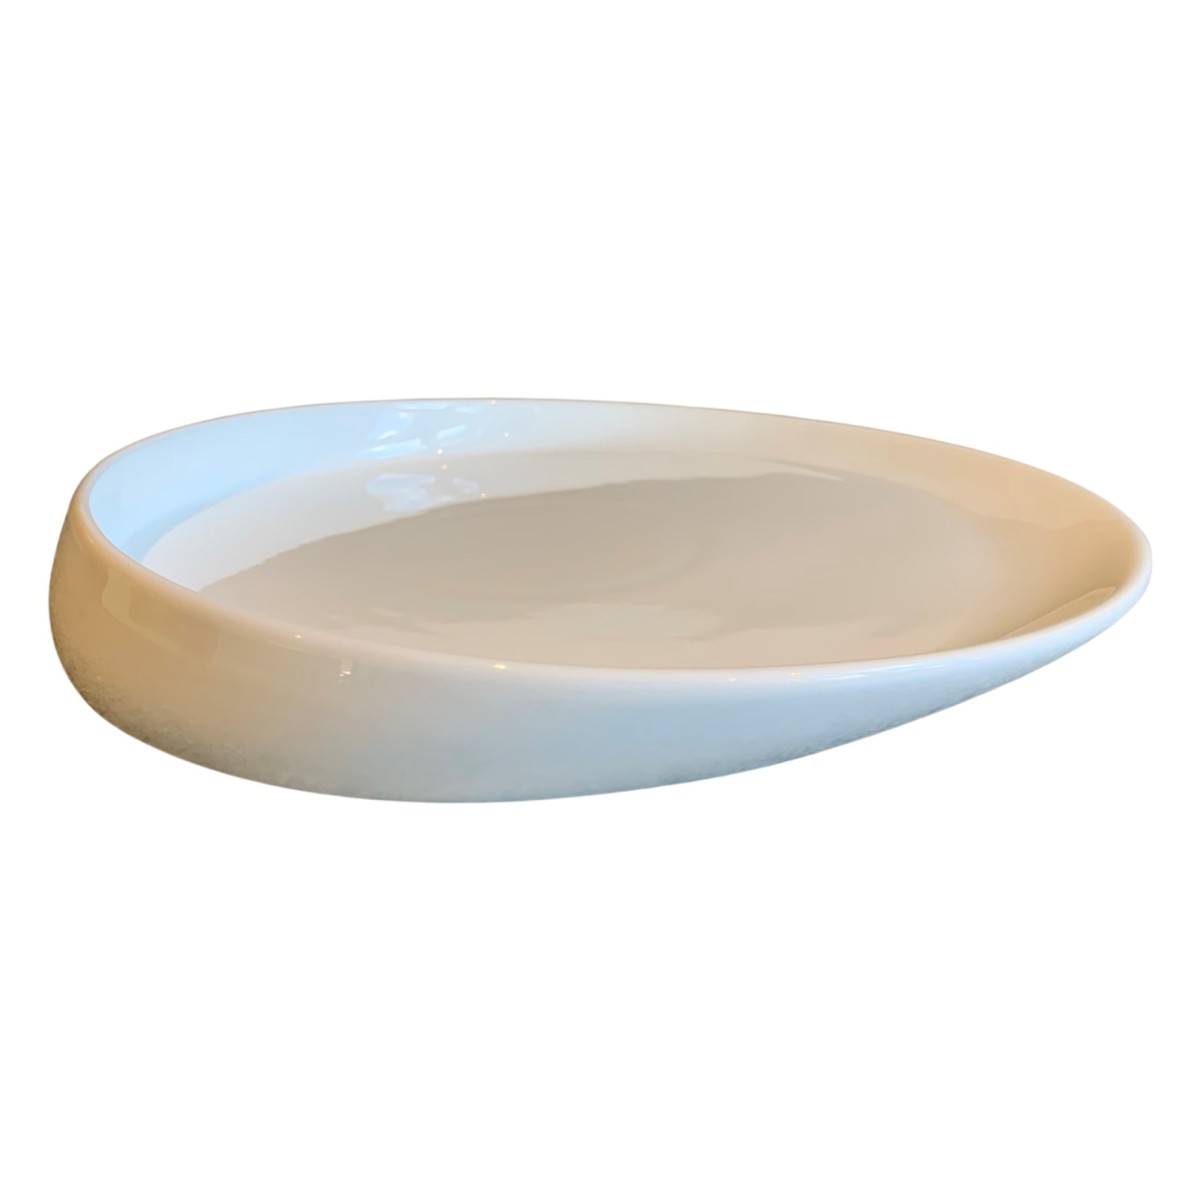 plate porcelain round design border 25x24xhg36cm box3